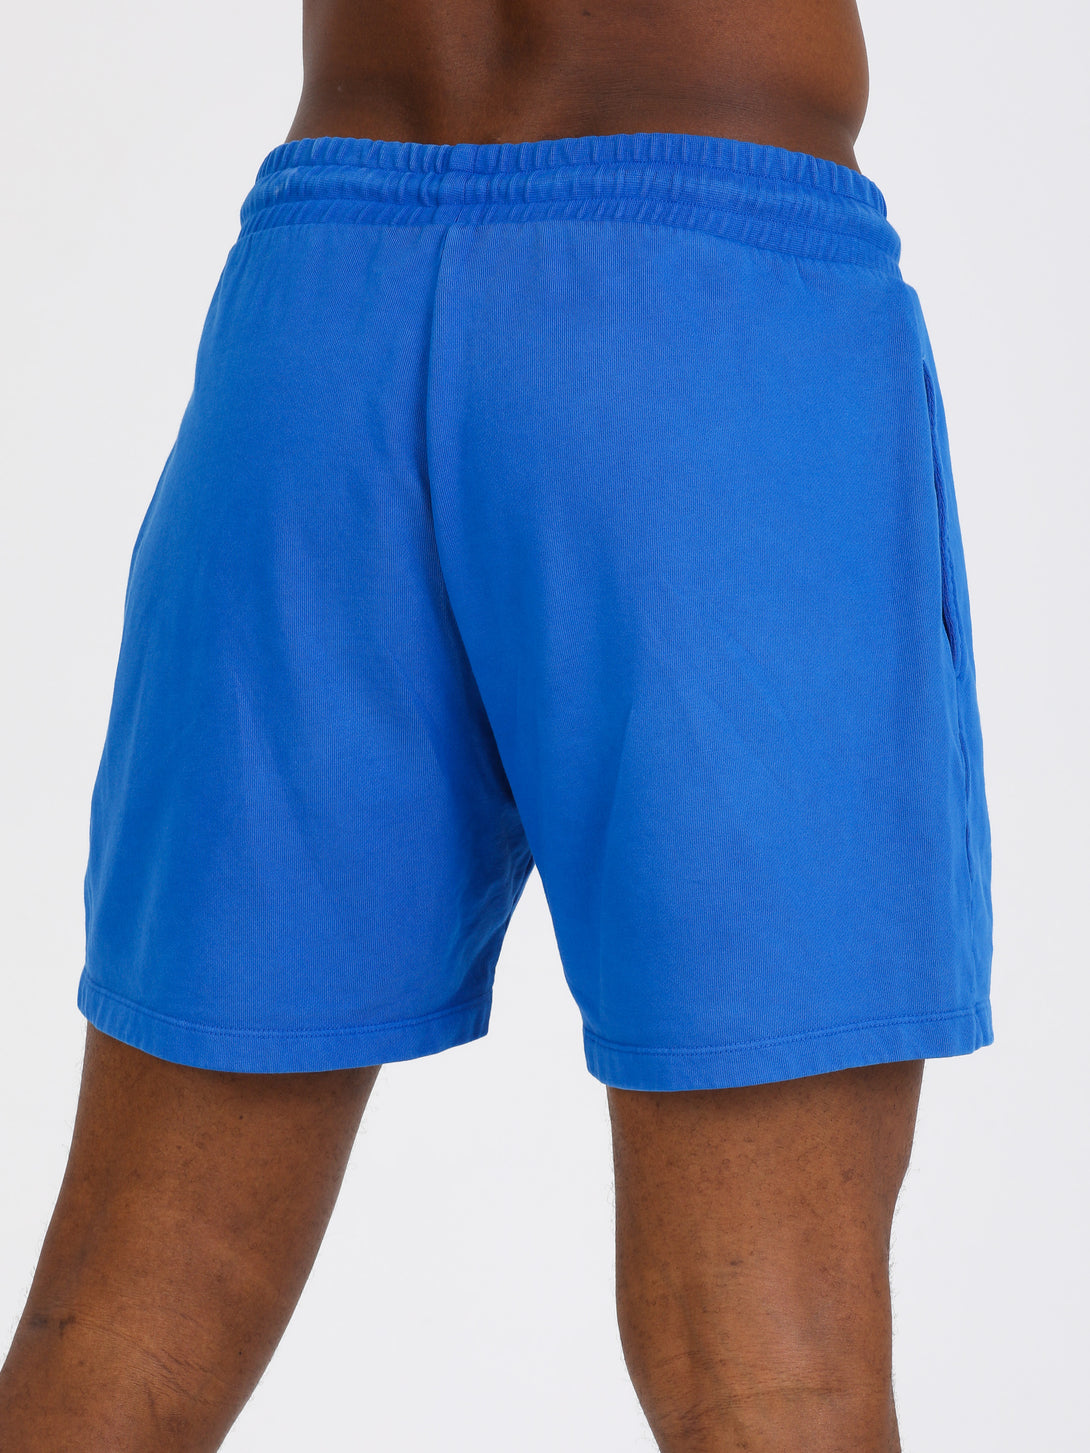 A Man Wearing Lapis Blue Color Essential Mens Workout Shorts